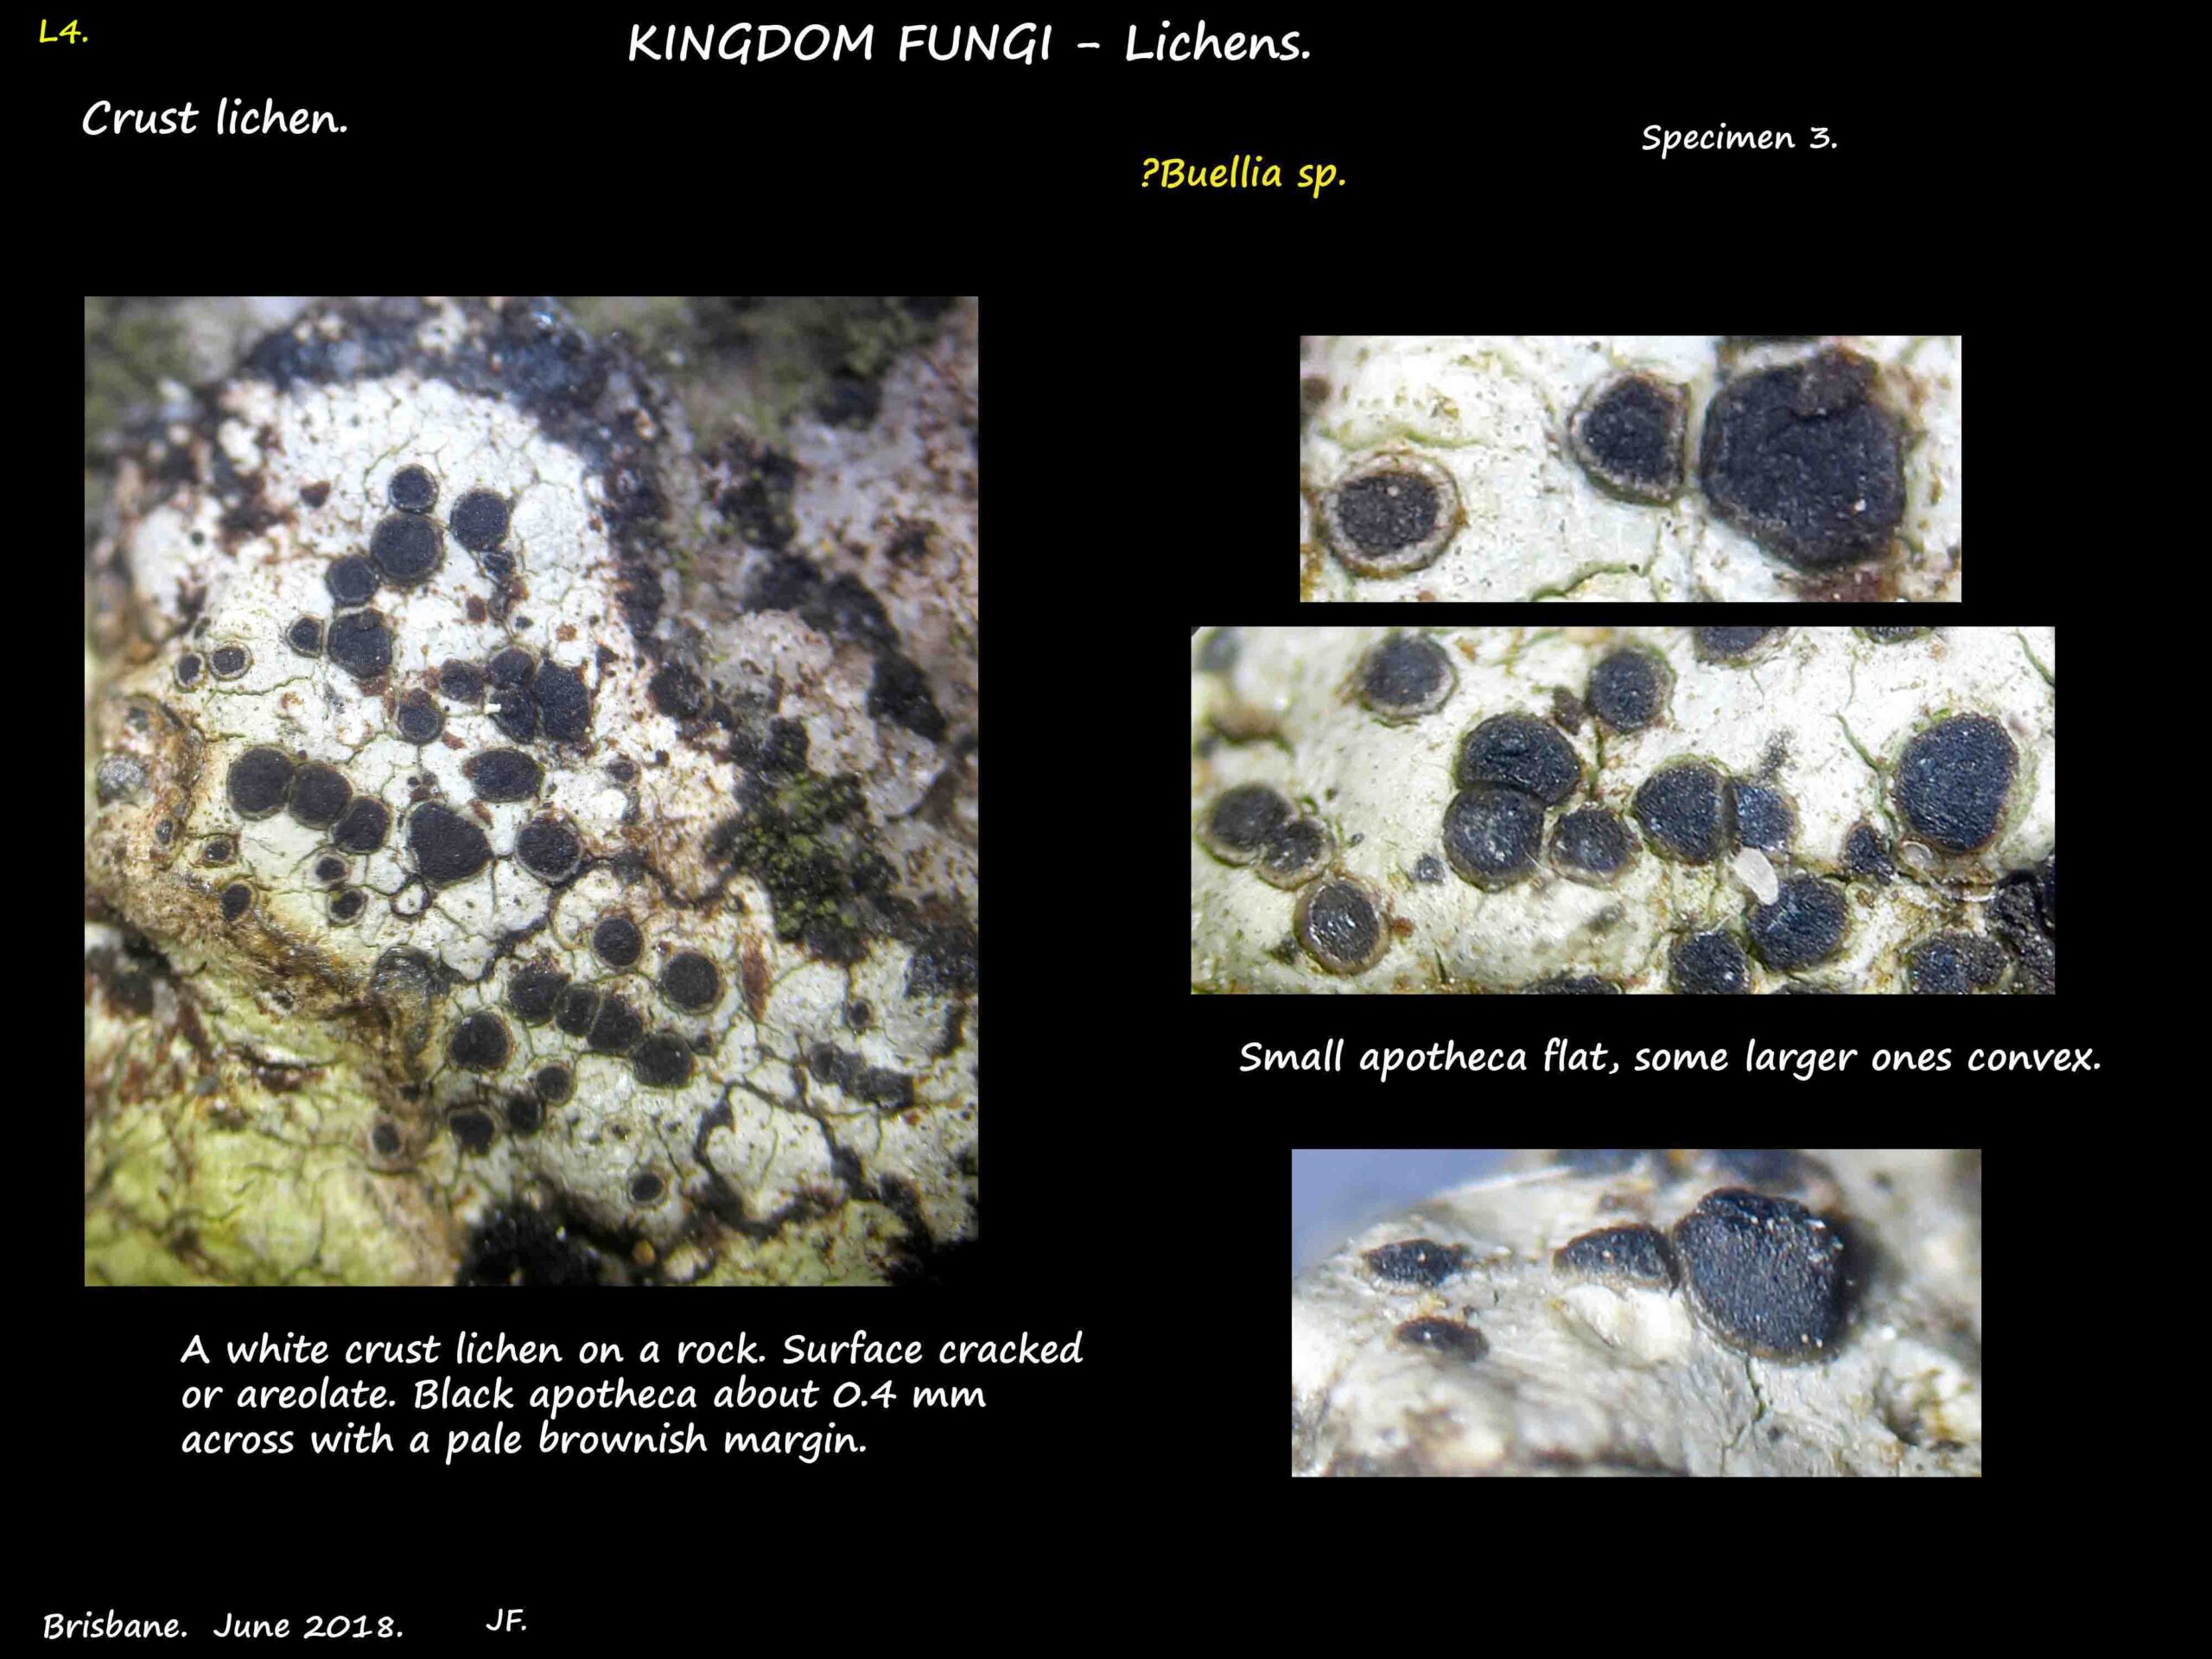 3 A crust lichen on a rock - possibly a Buellia